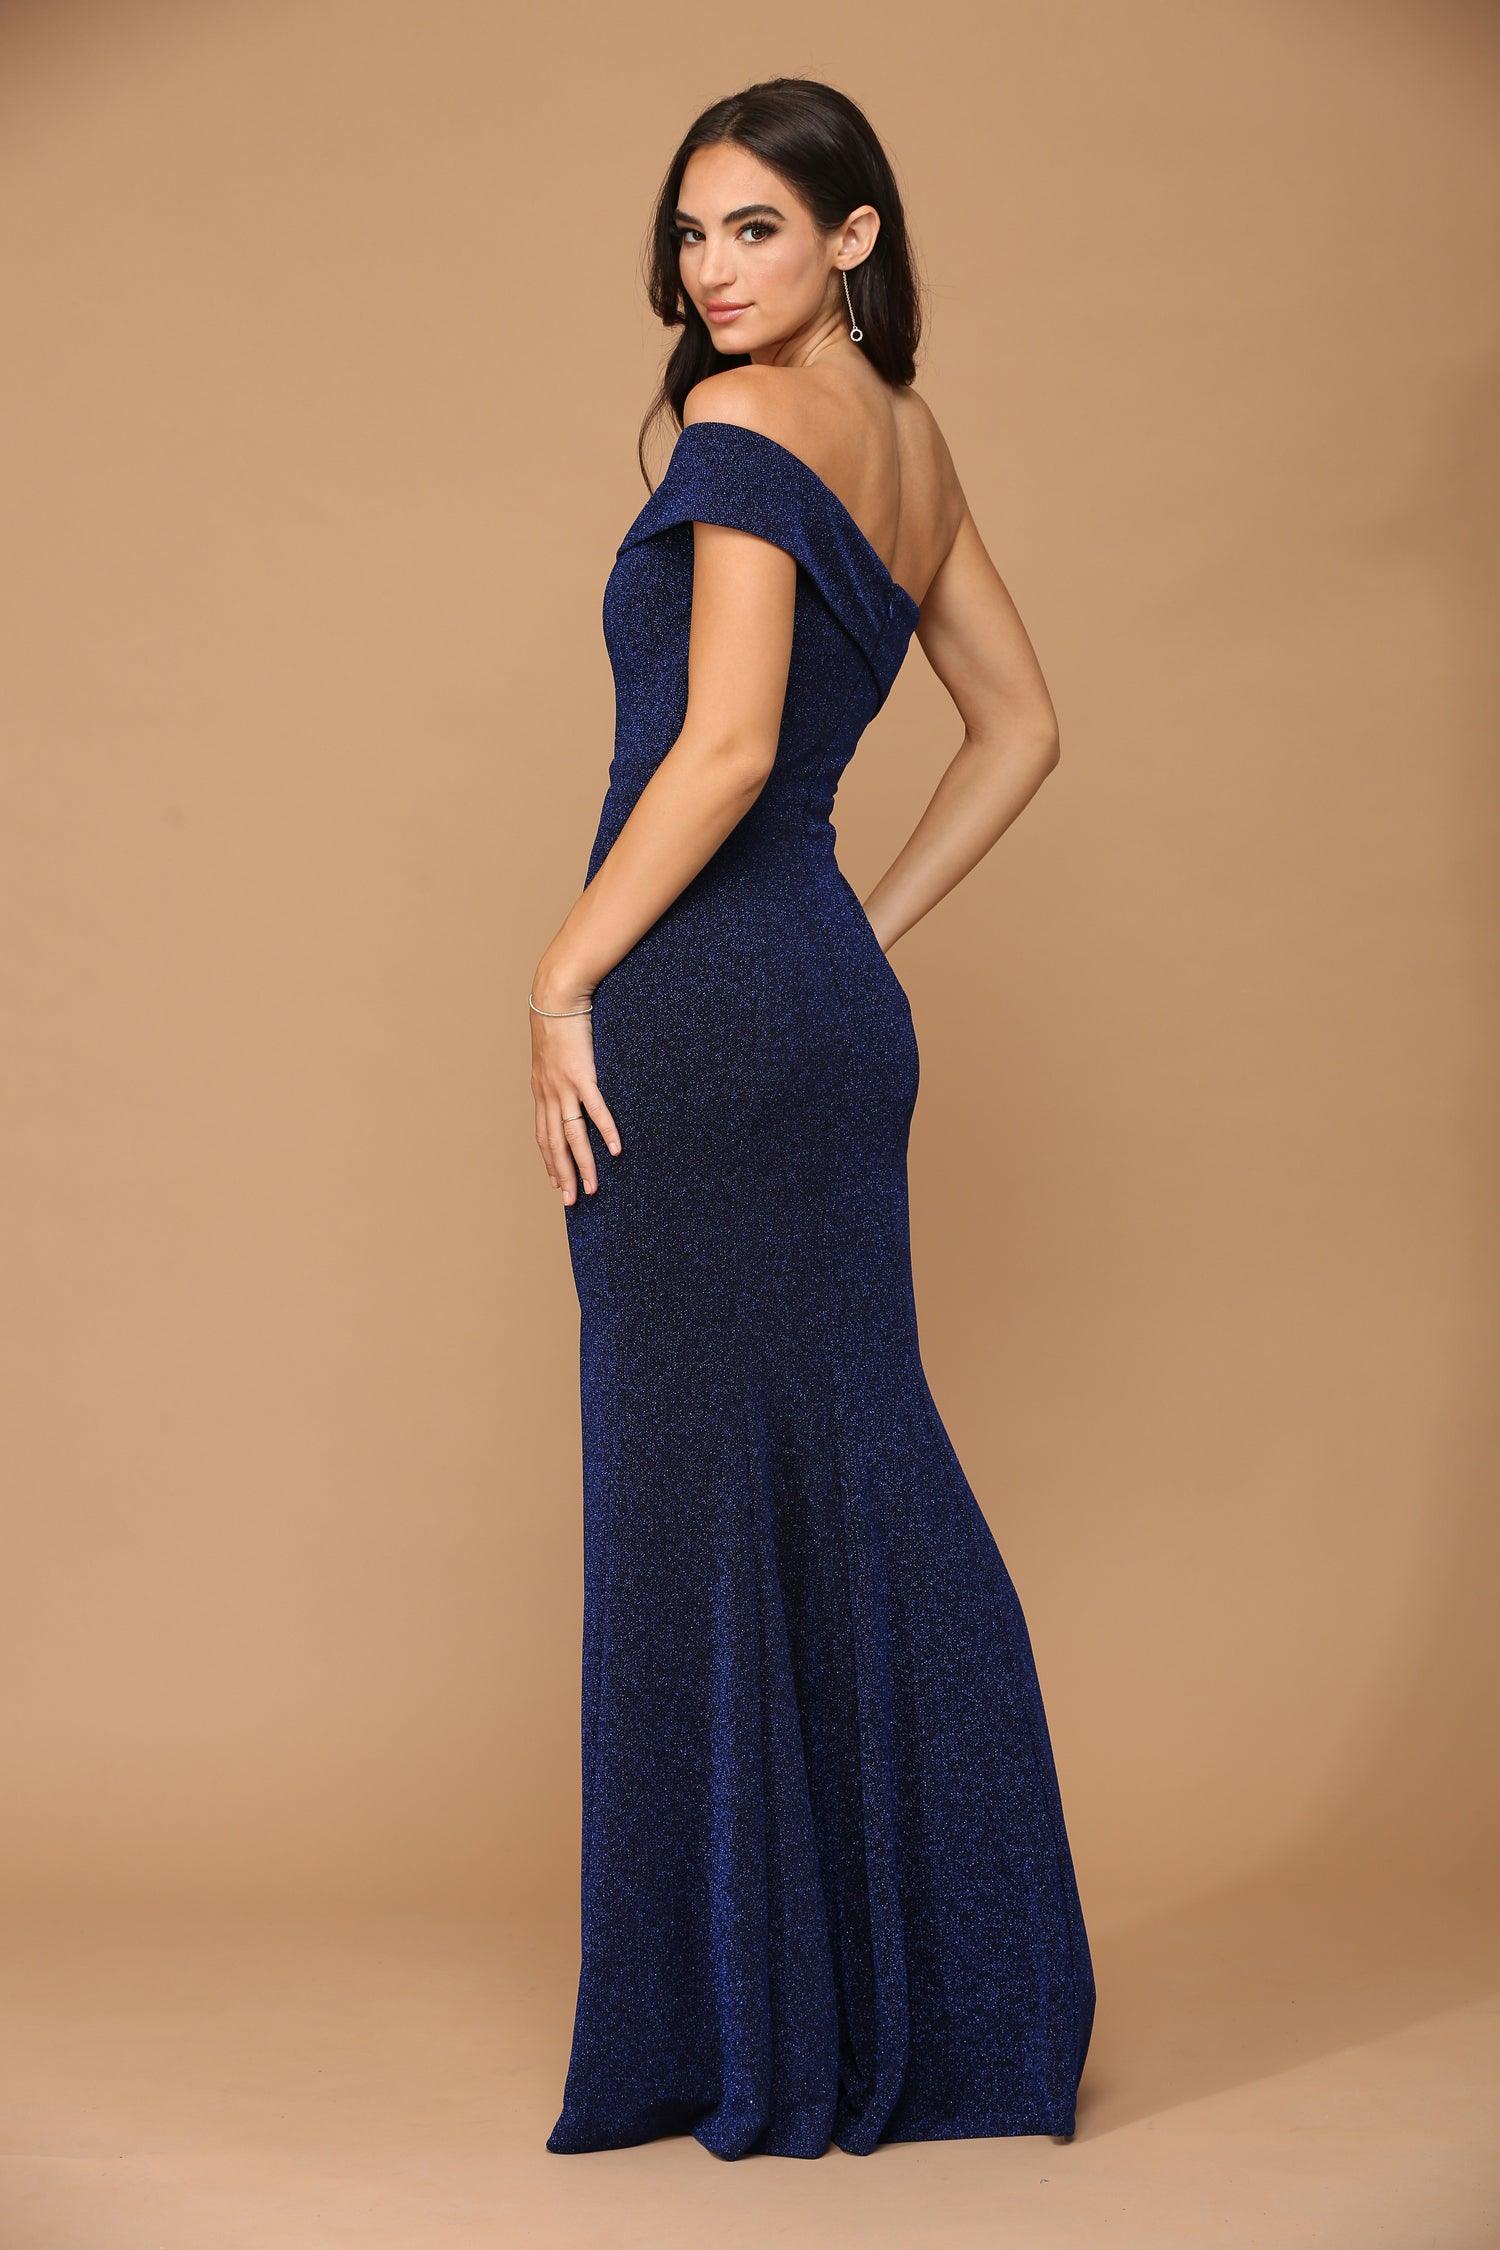 Long One Shoulder Formal Metallic Prom Dress The Dress, 54% OFF